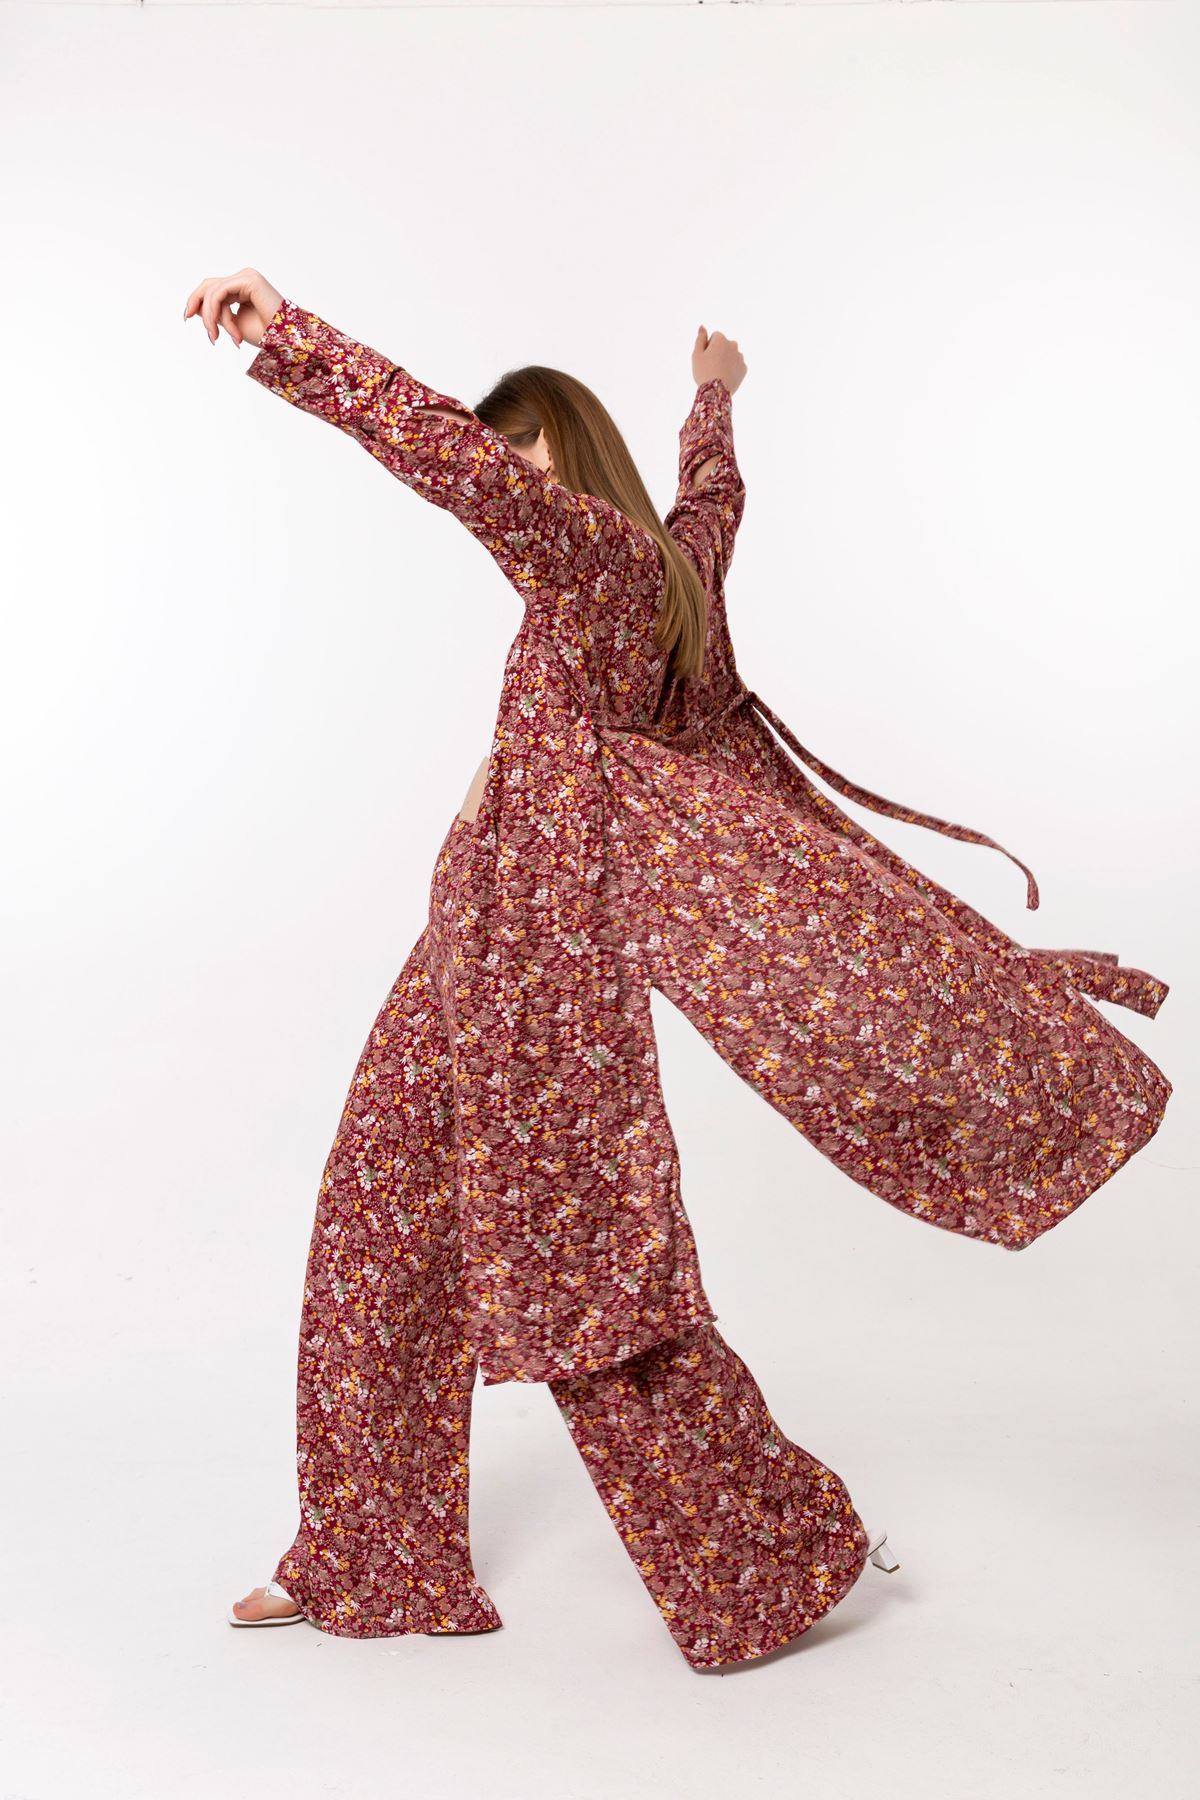 Long Sleeve Without Collar Below Knee Oversize Crispy Floral Women Kimono - Burgundy